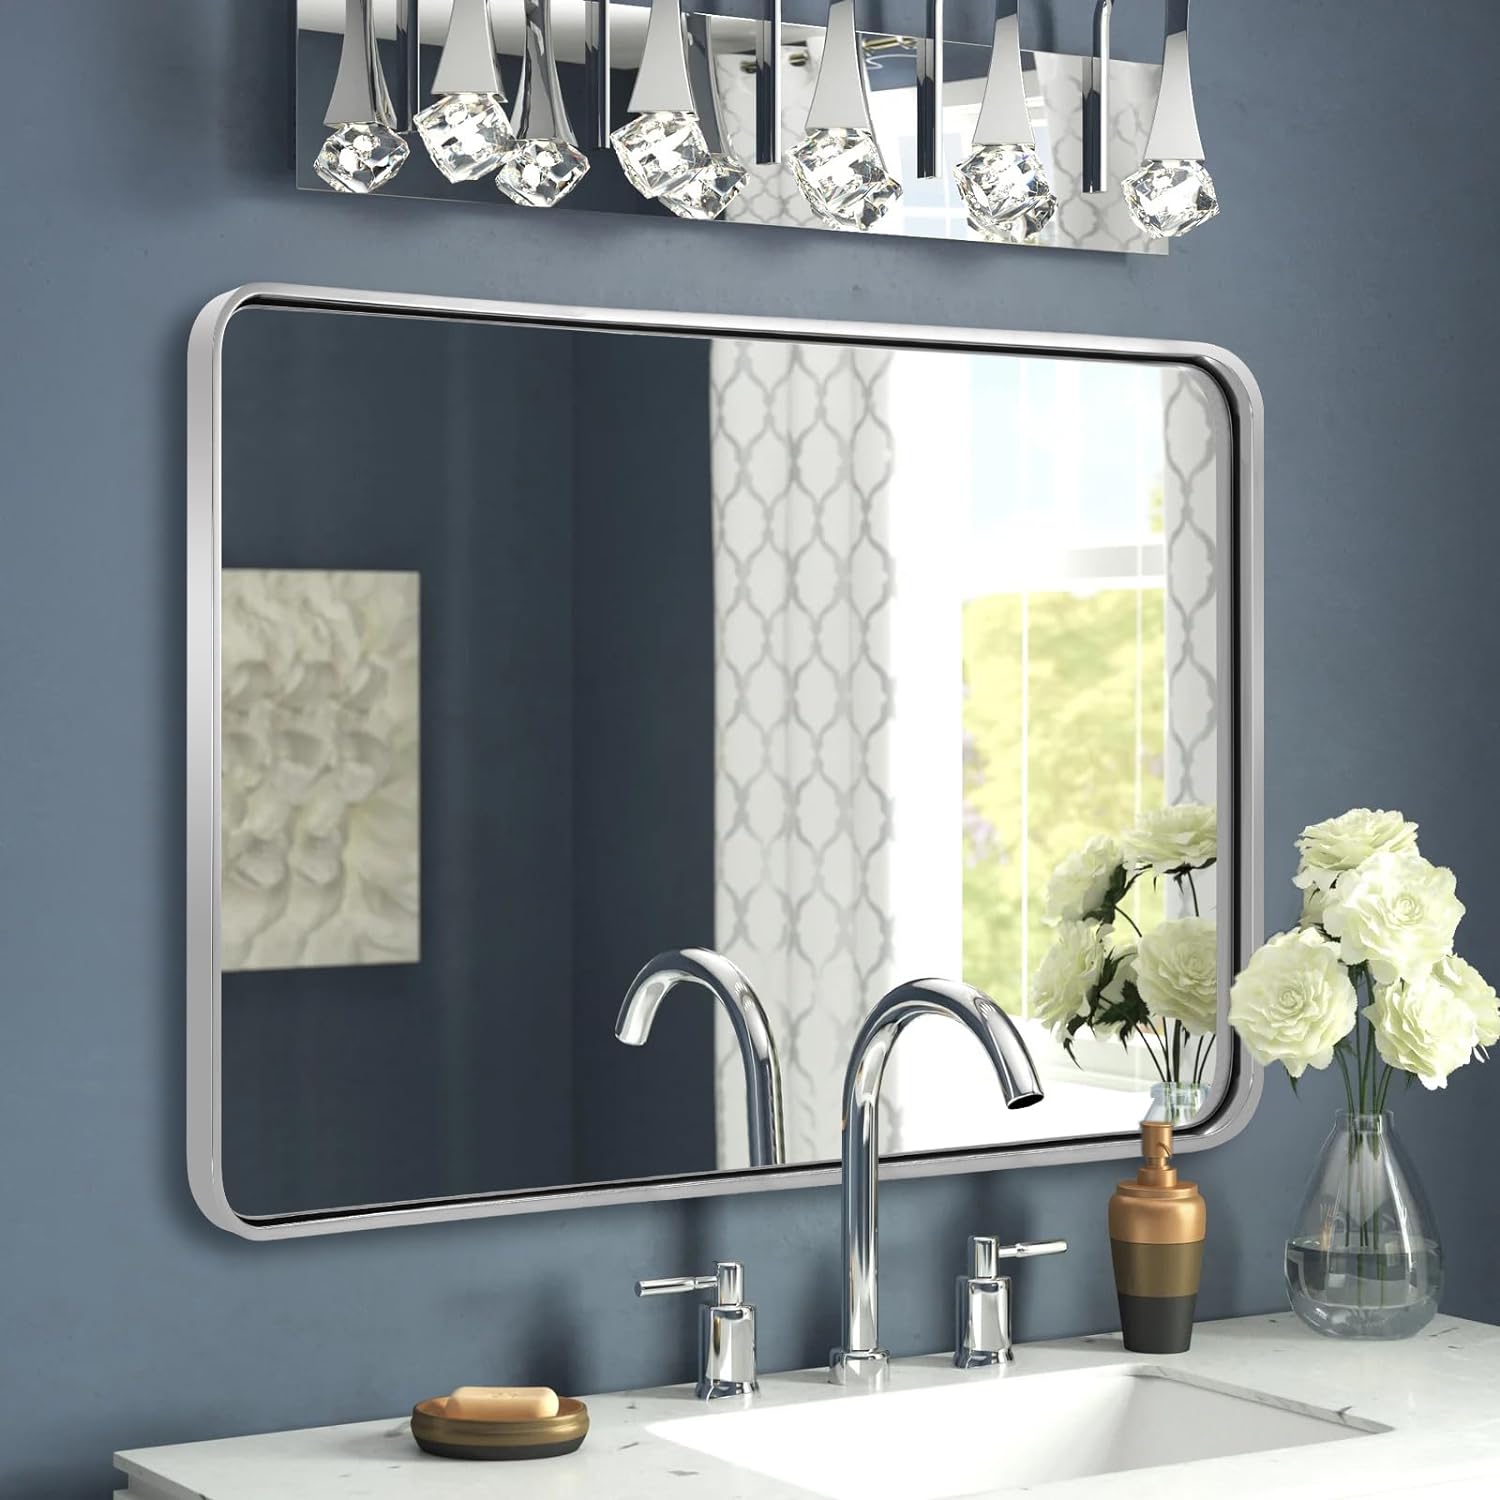 Modern Bold Framed Rectangle Wall Mirrors for Bathroom Wall| Stainless Steel Framed